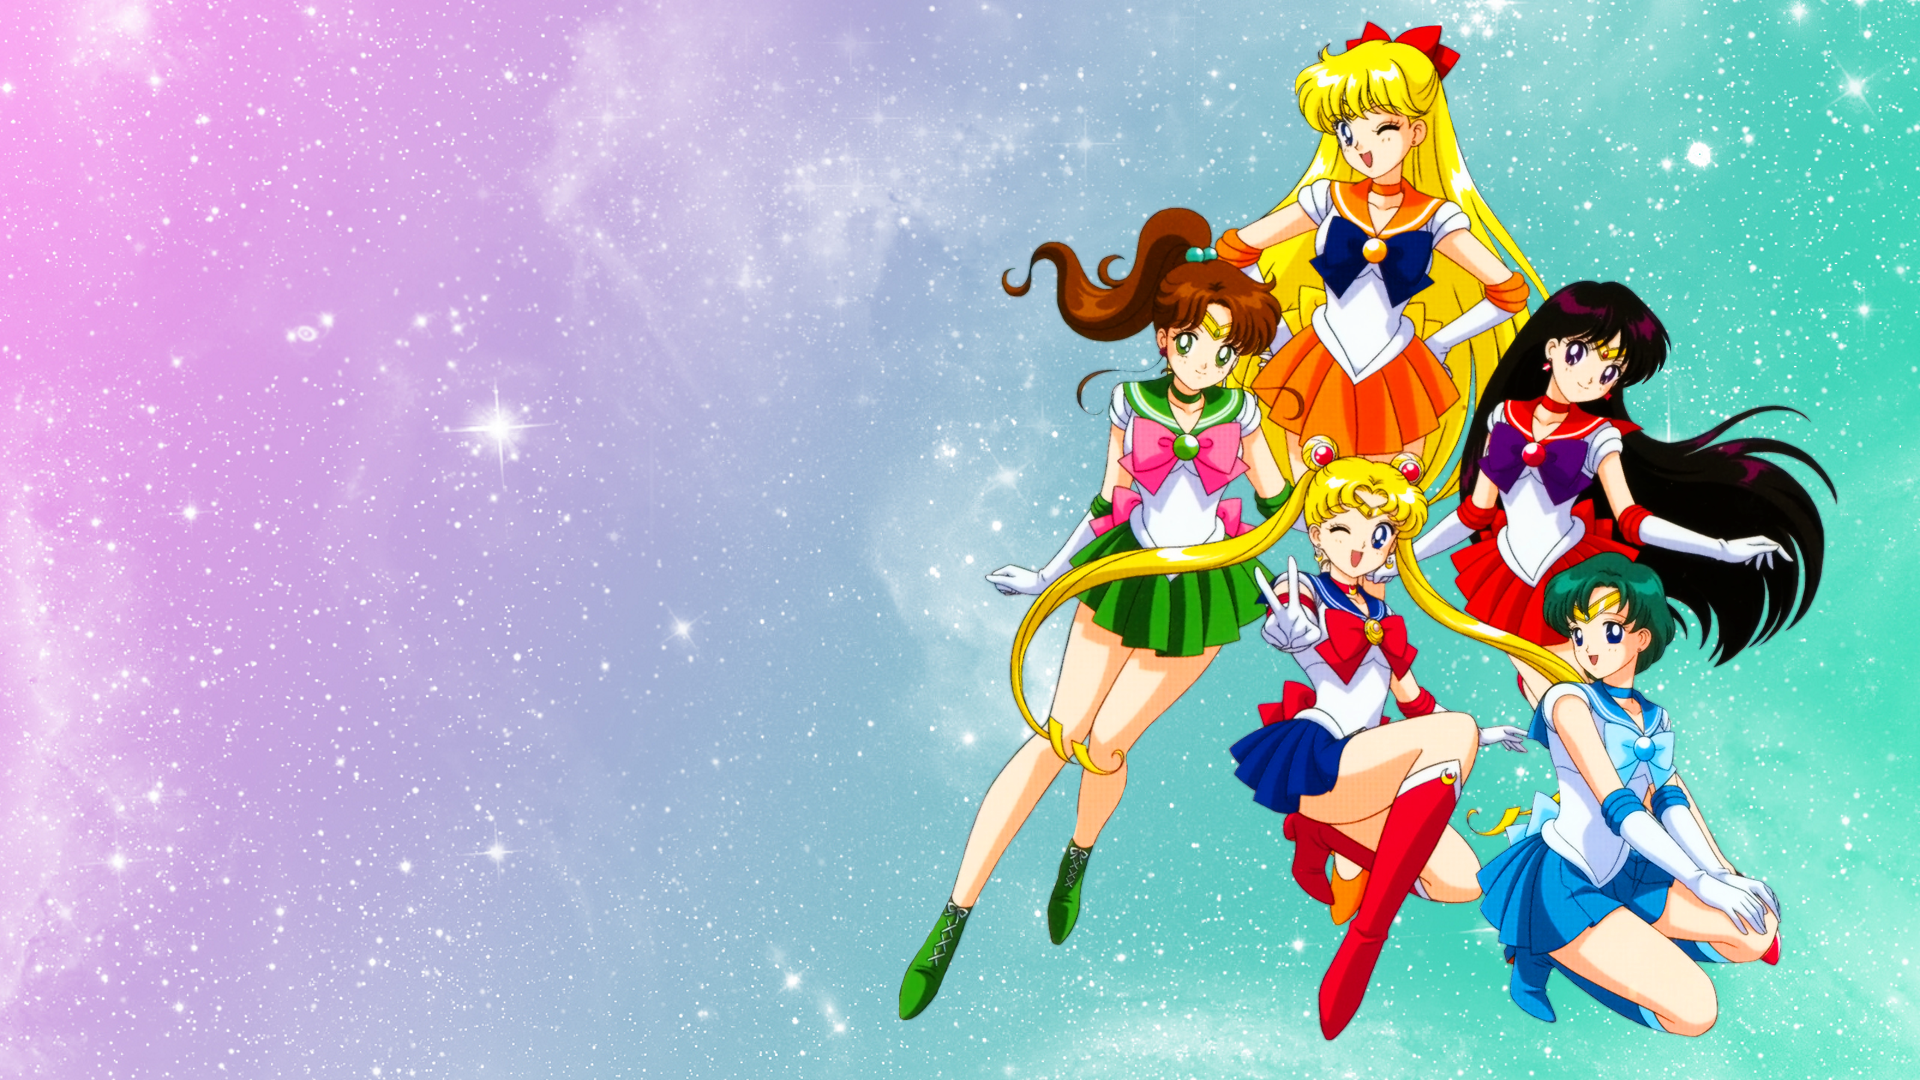 Село мун. Сейлормун. Сейлормун Sailor Moon. Красавица-воин сейлормун Сейлор-звезды.